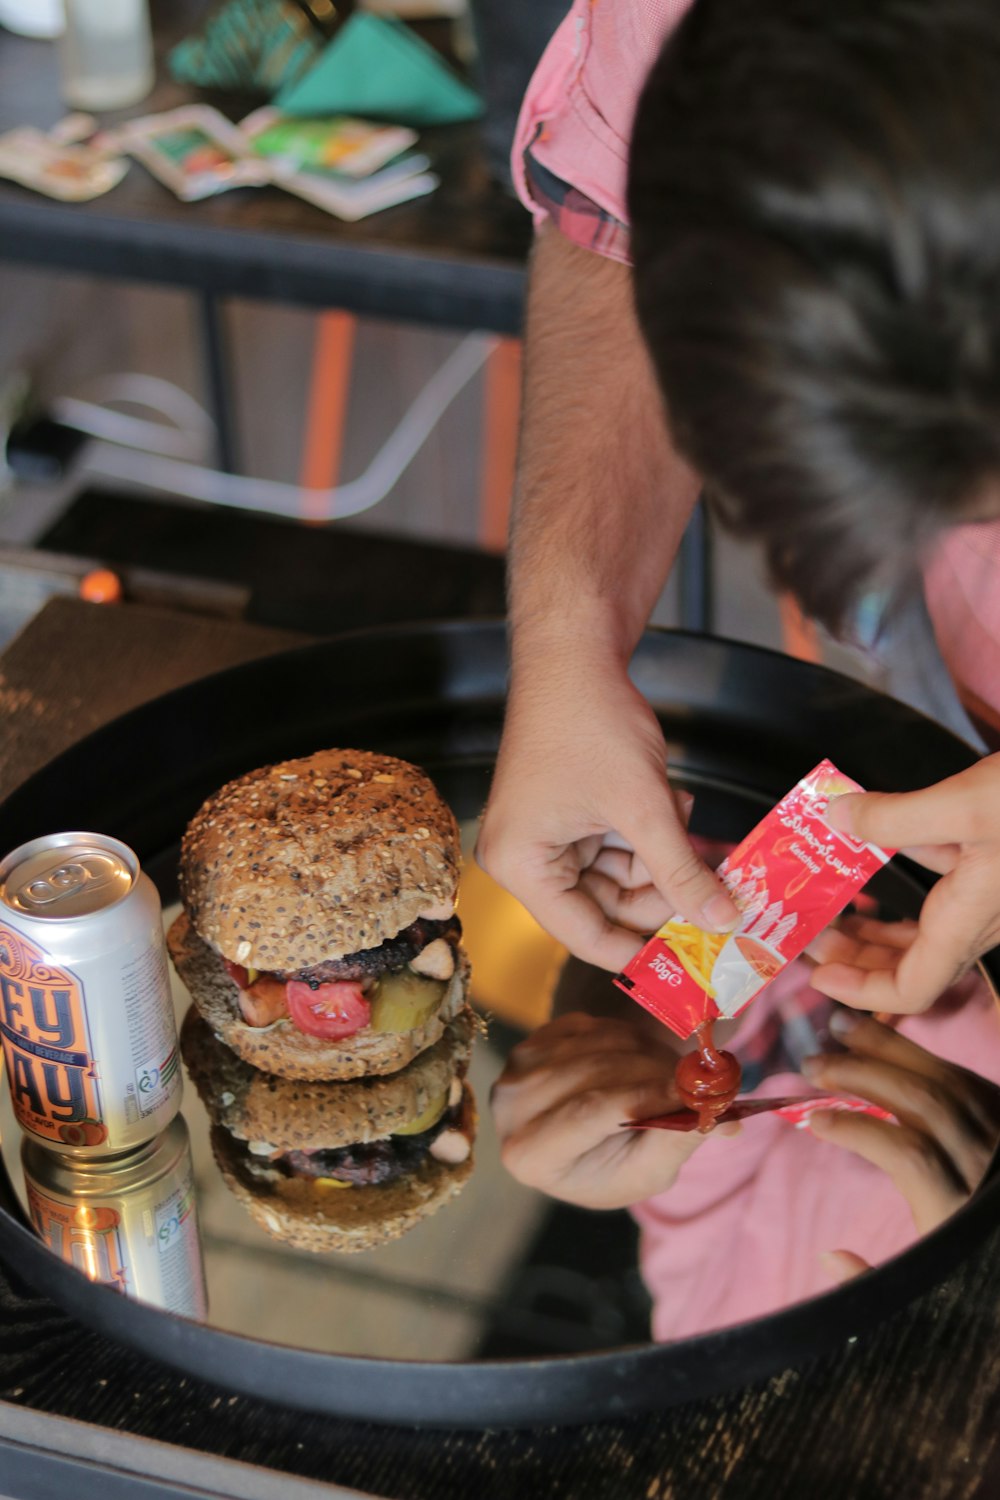 Un homme met un sac de chips dans un hamburger